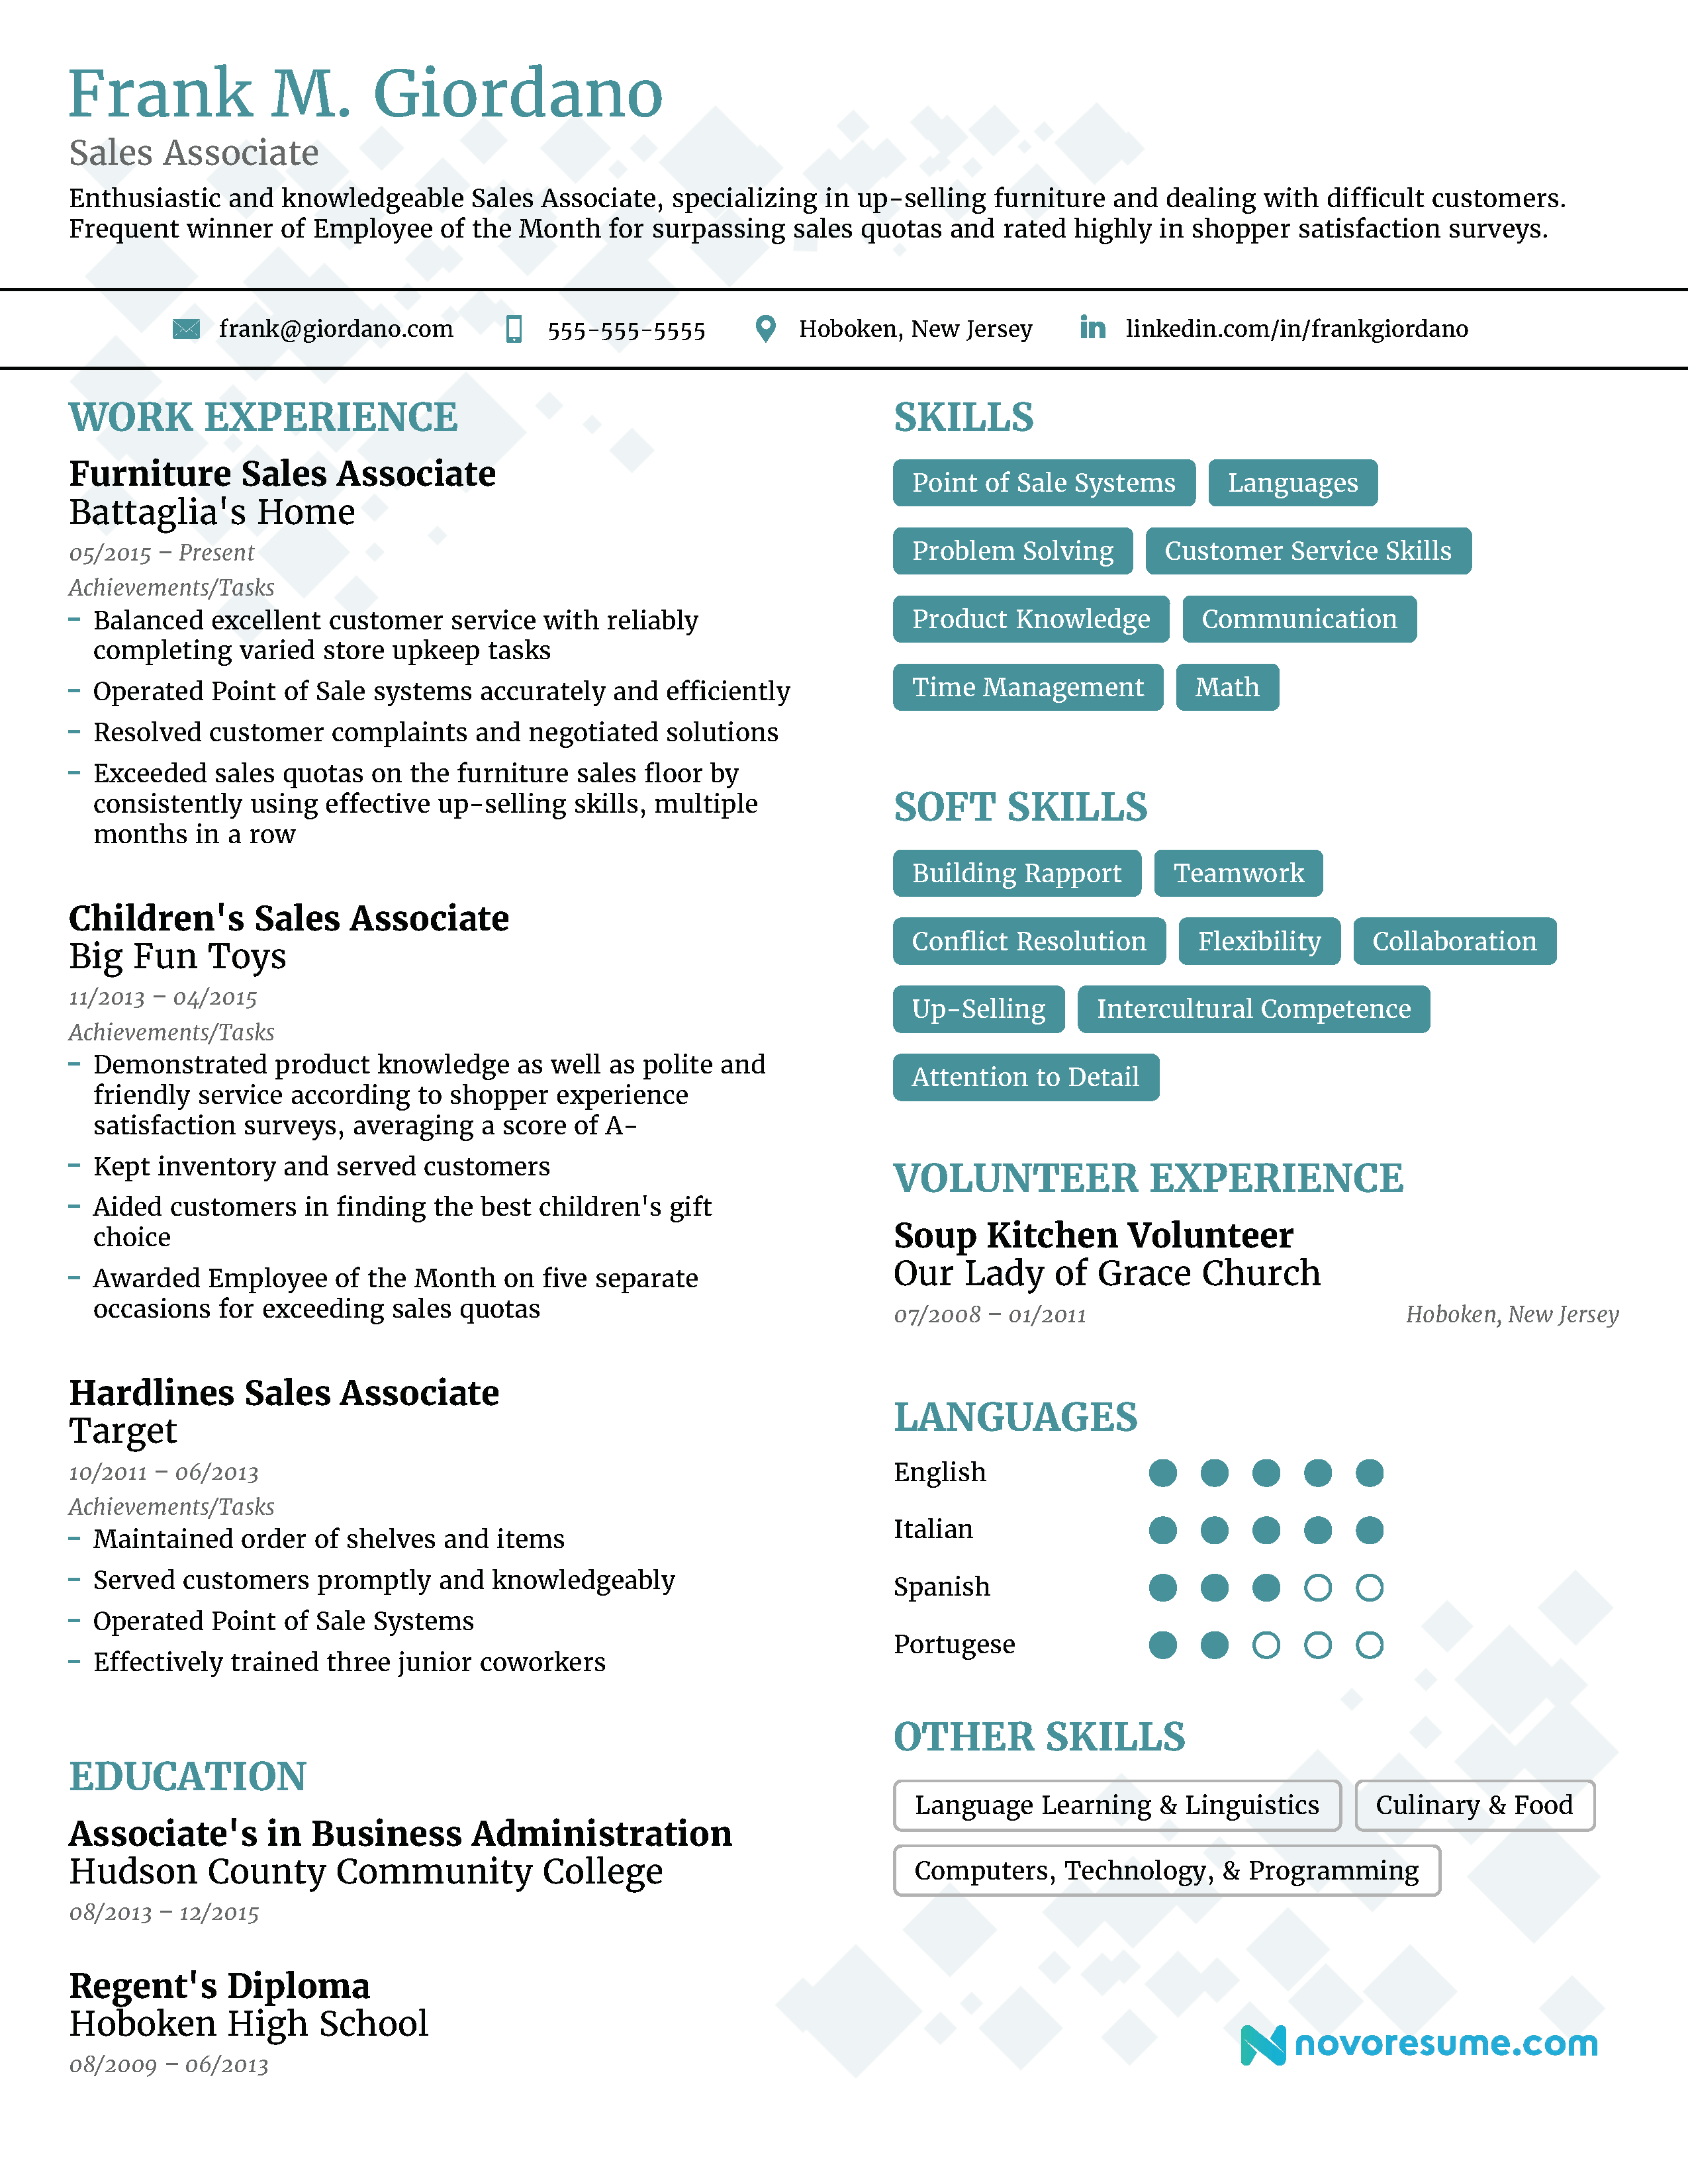 Customer Service Resume Skills Sales Associate Resume customer service resume skills|wikiresume.com